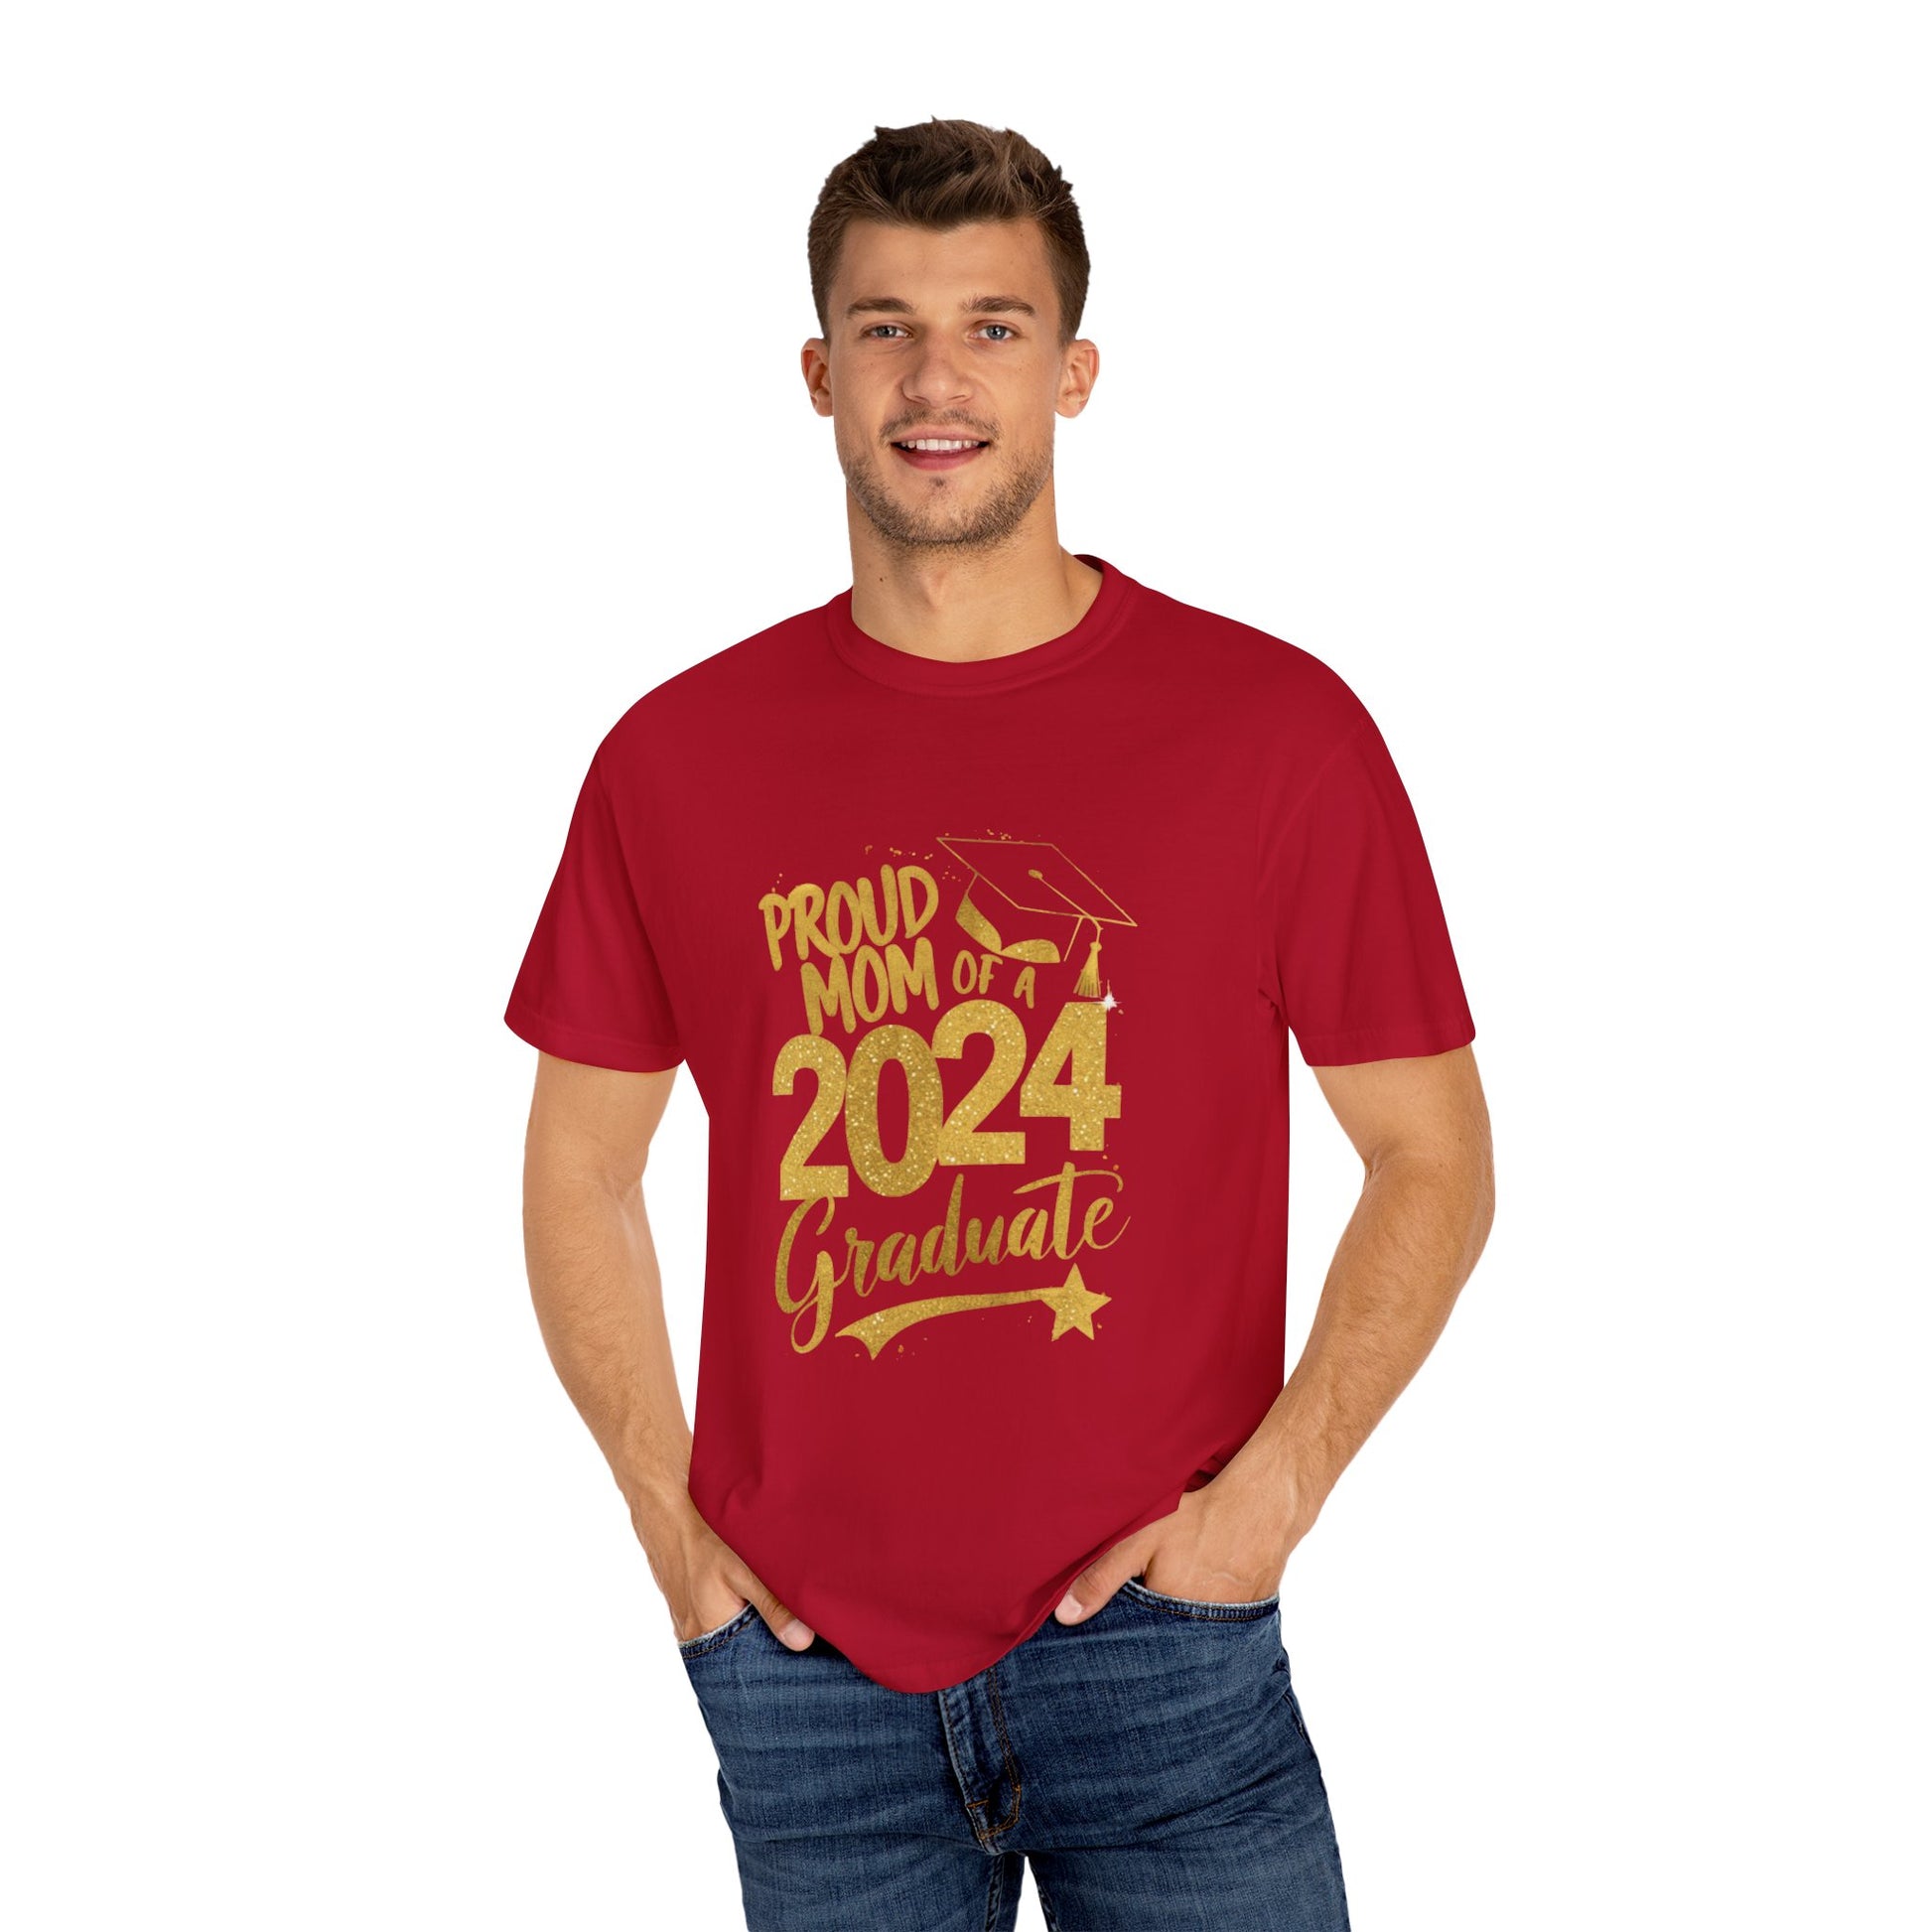 Proud of Mom 2024 Graduate Unisex Garment-dyed T-shirt Cotton Funny Humorous Graphic Soft Premium Unisex Men Women Red T-shirt Birthday Gift-21